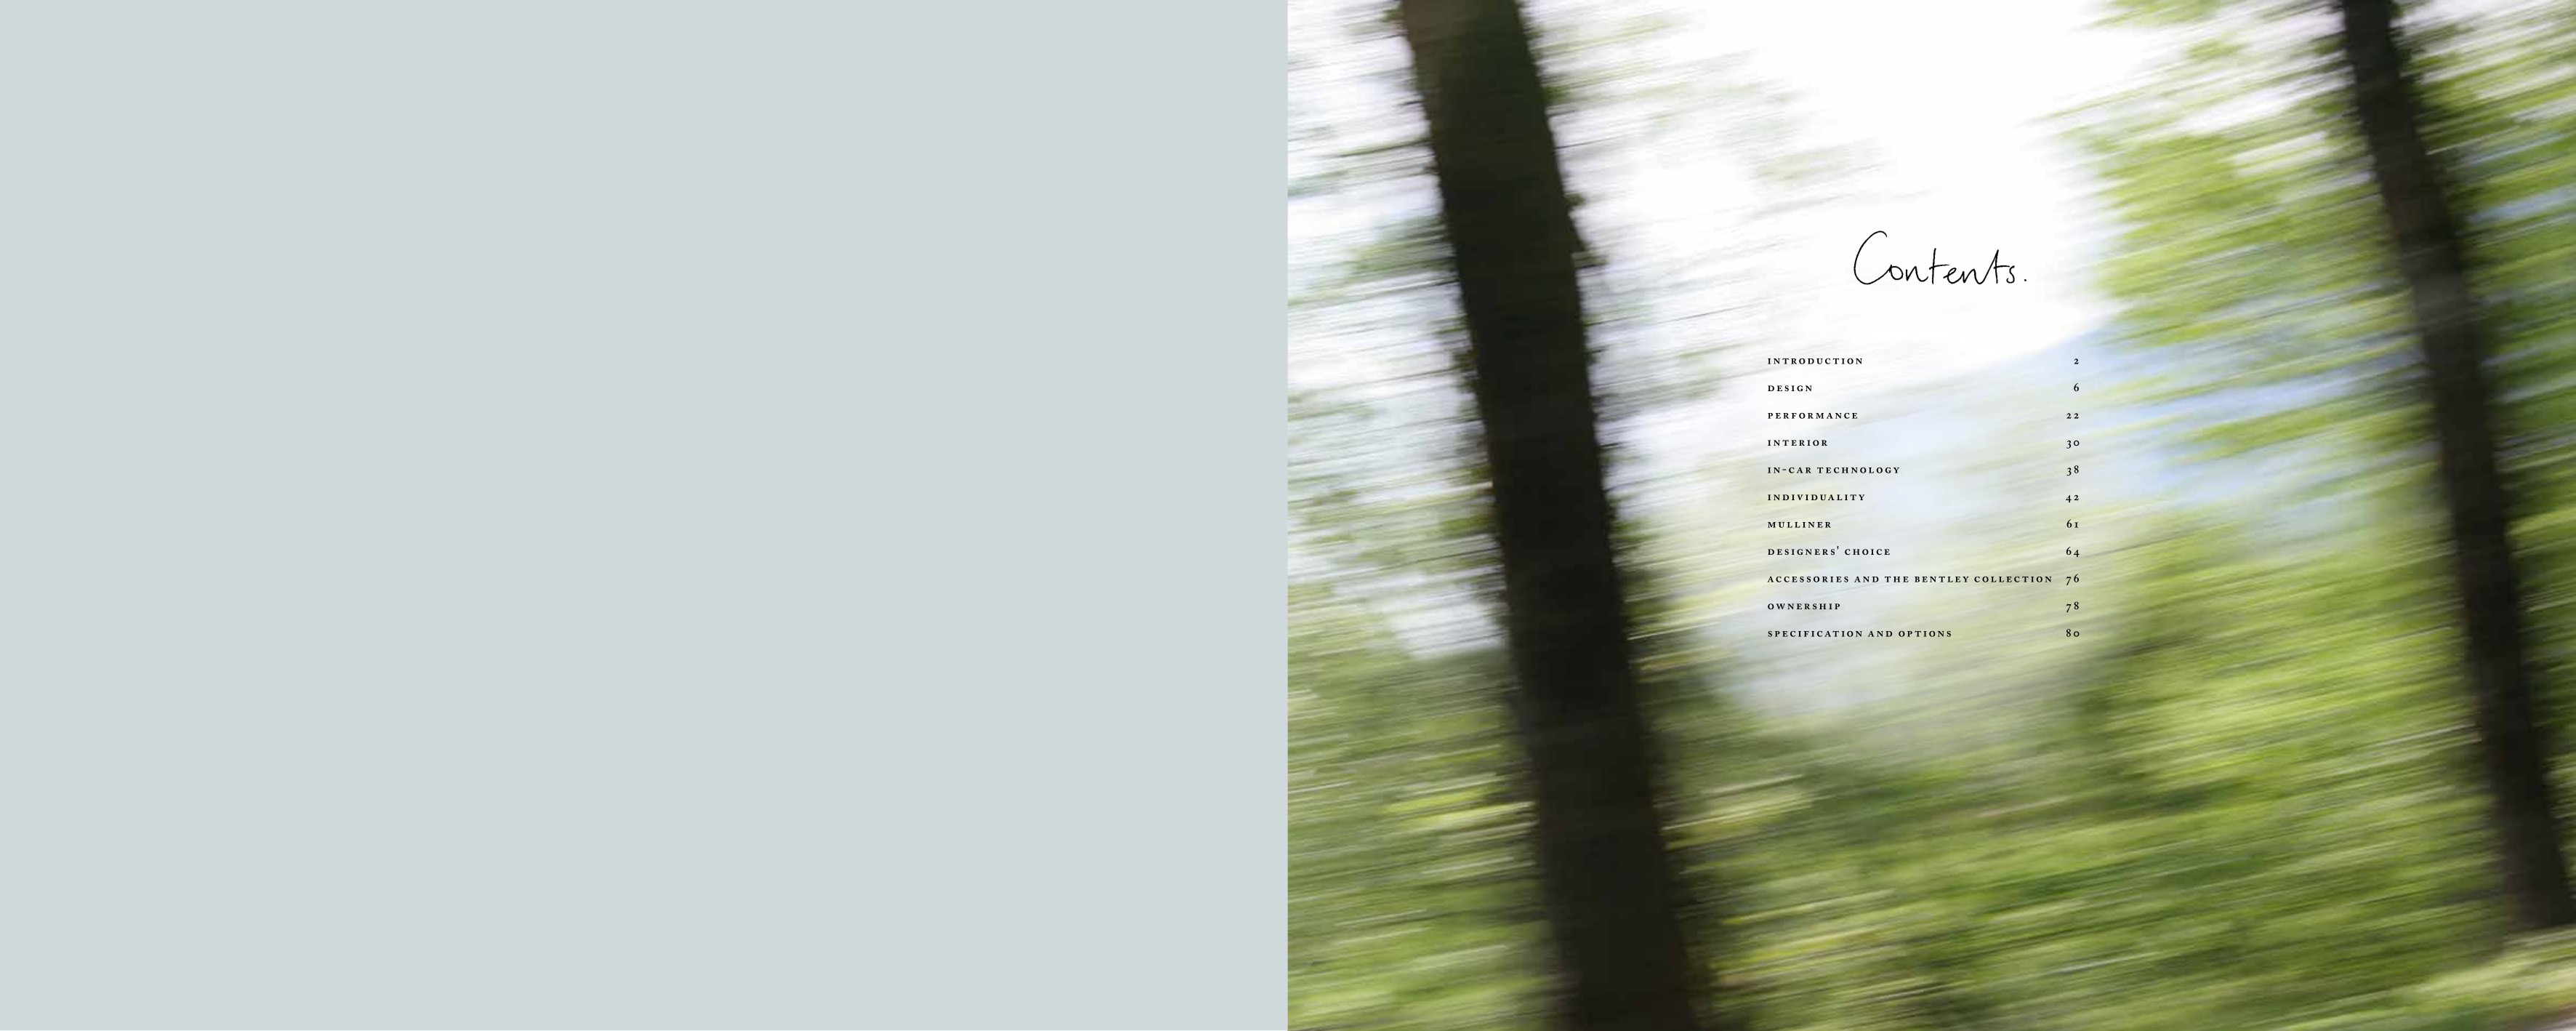 2012 Bentley Continental GT Speed Brochure Page 3